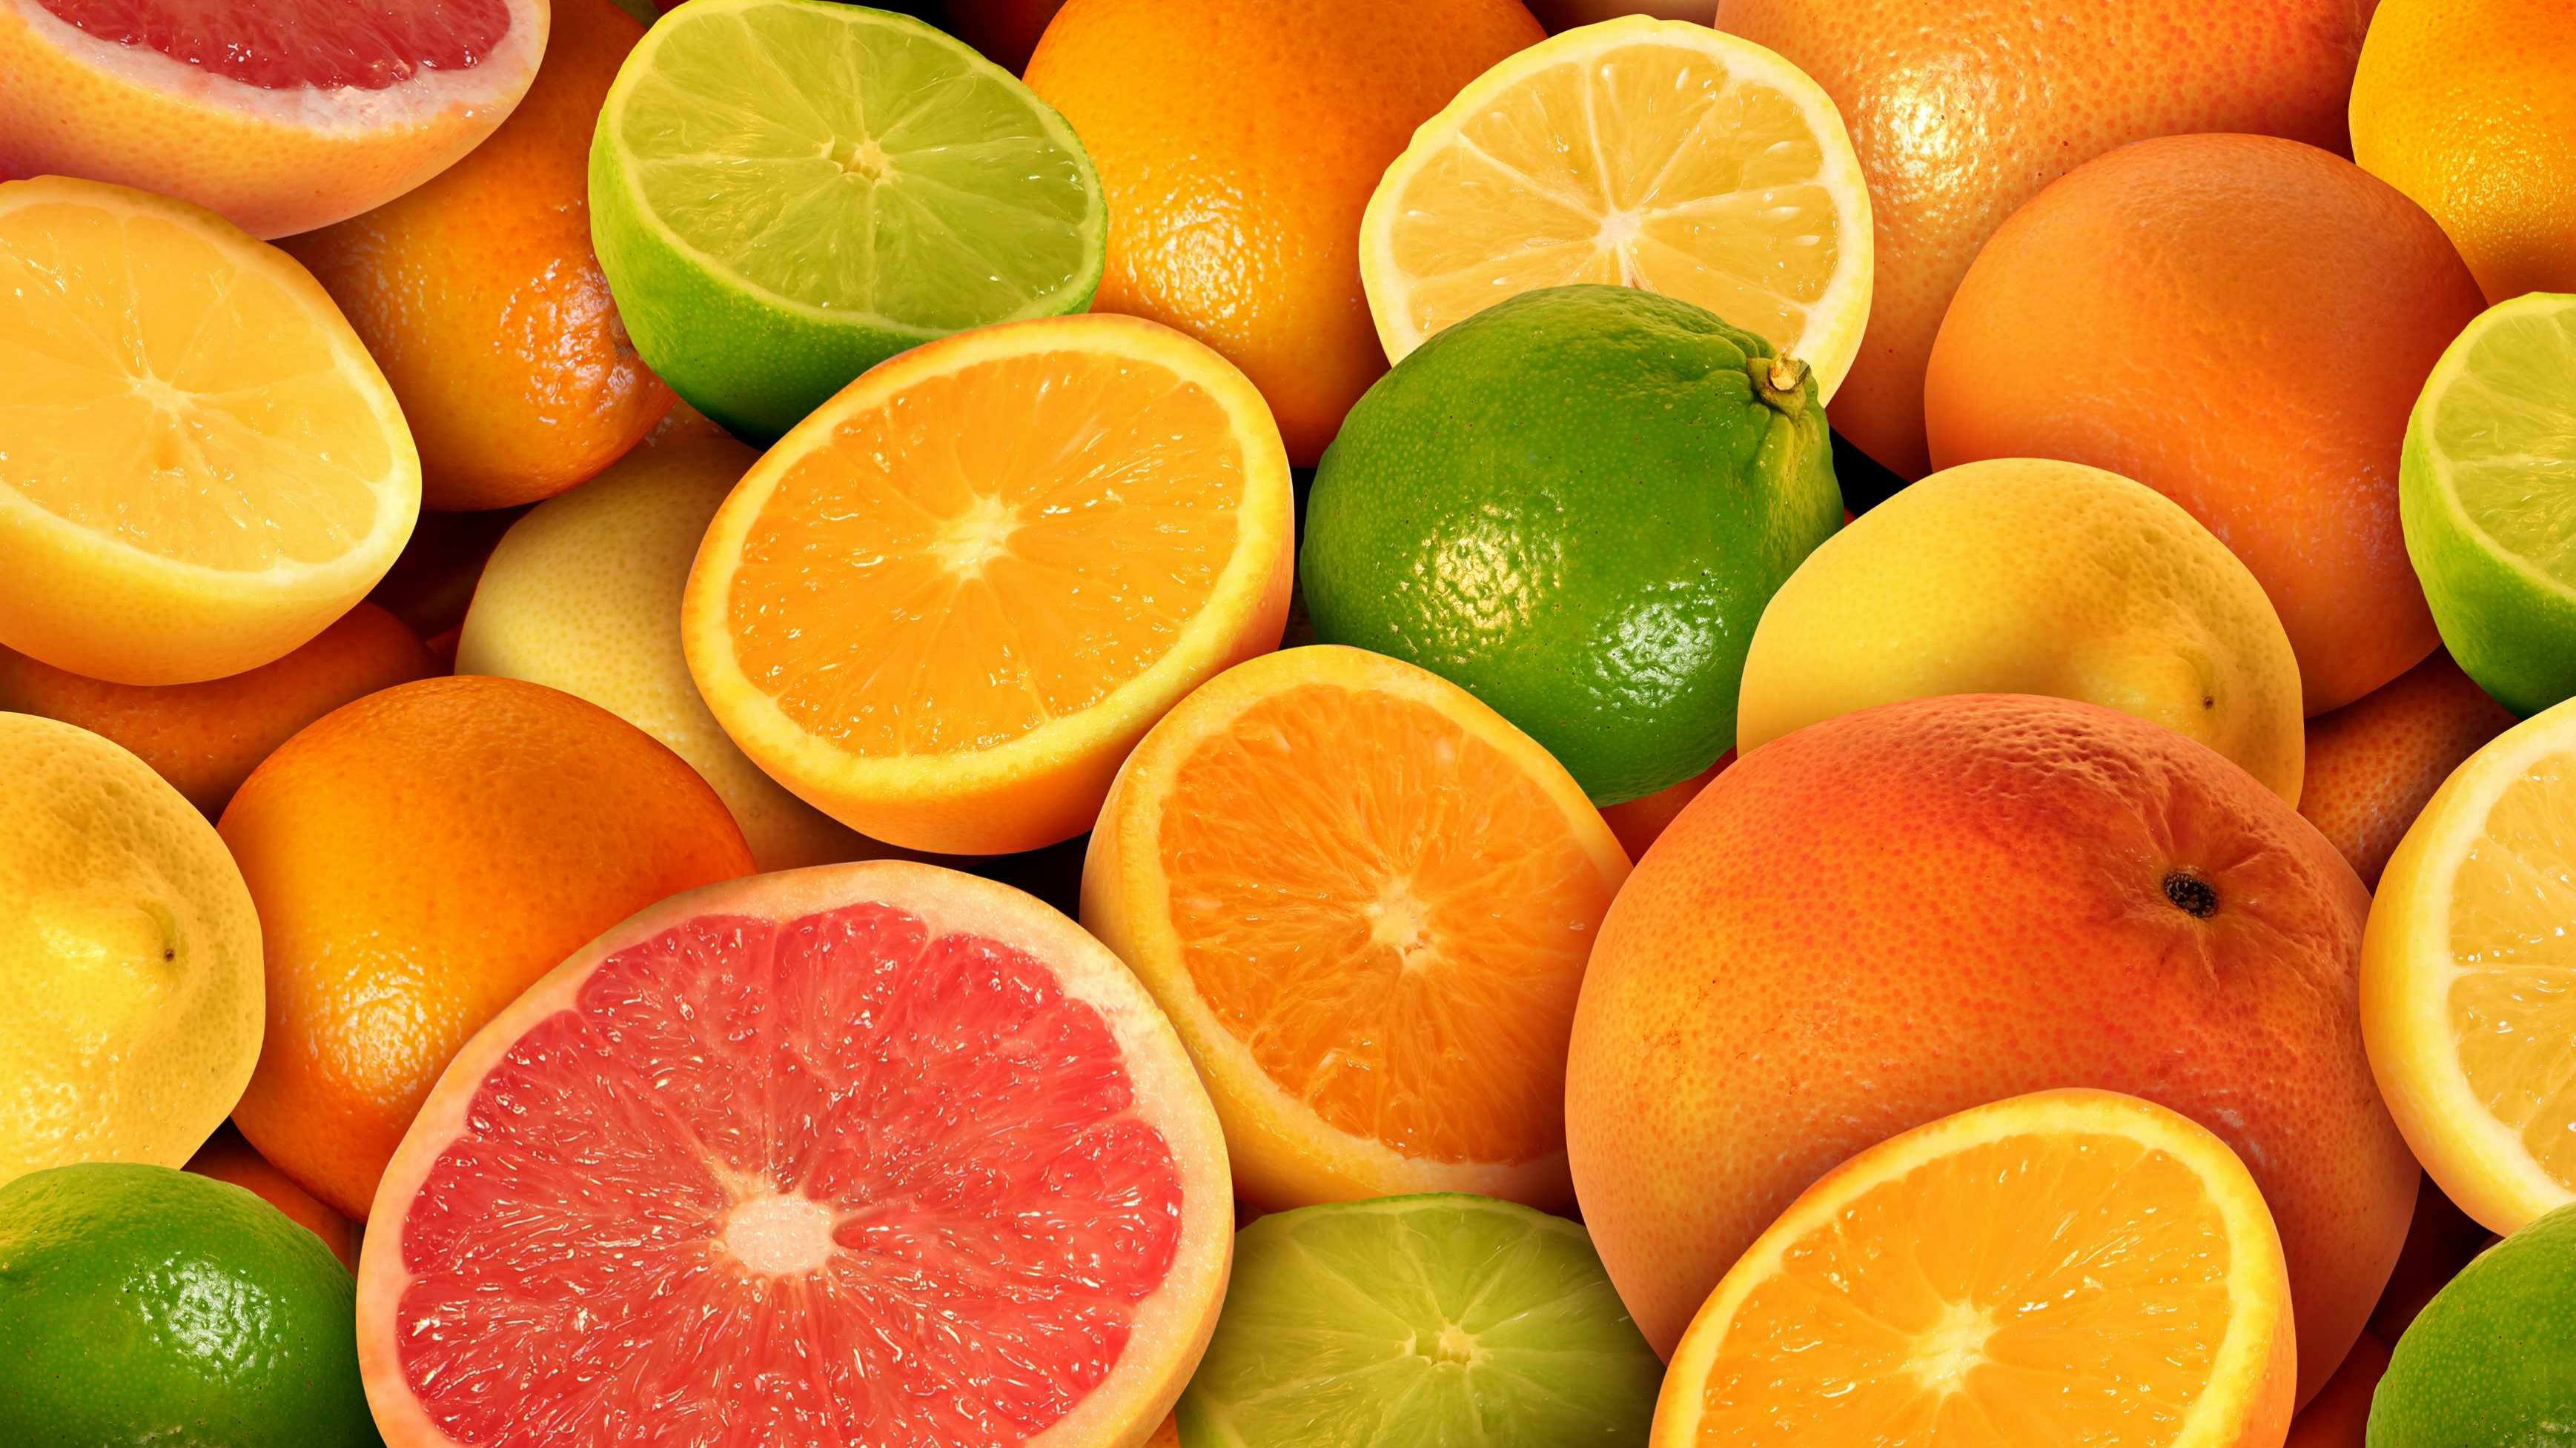 a pile of citrus fruits, oranges, lemons, limes and grapefruits 